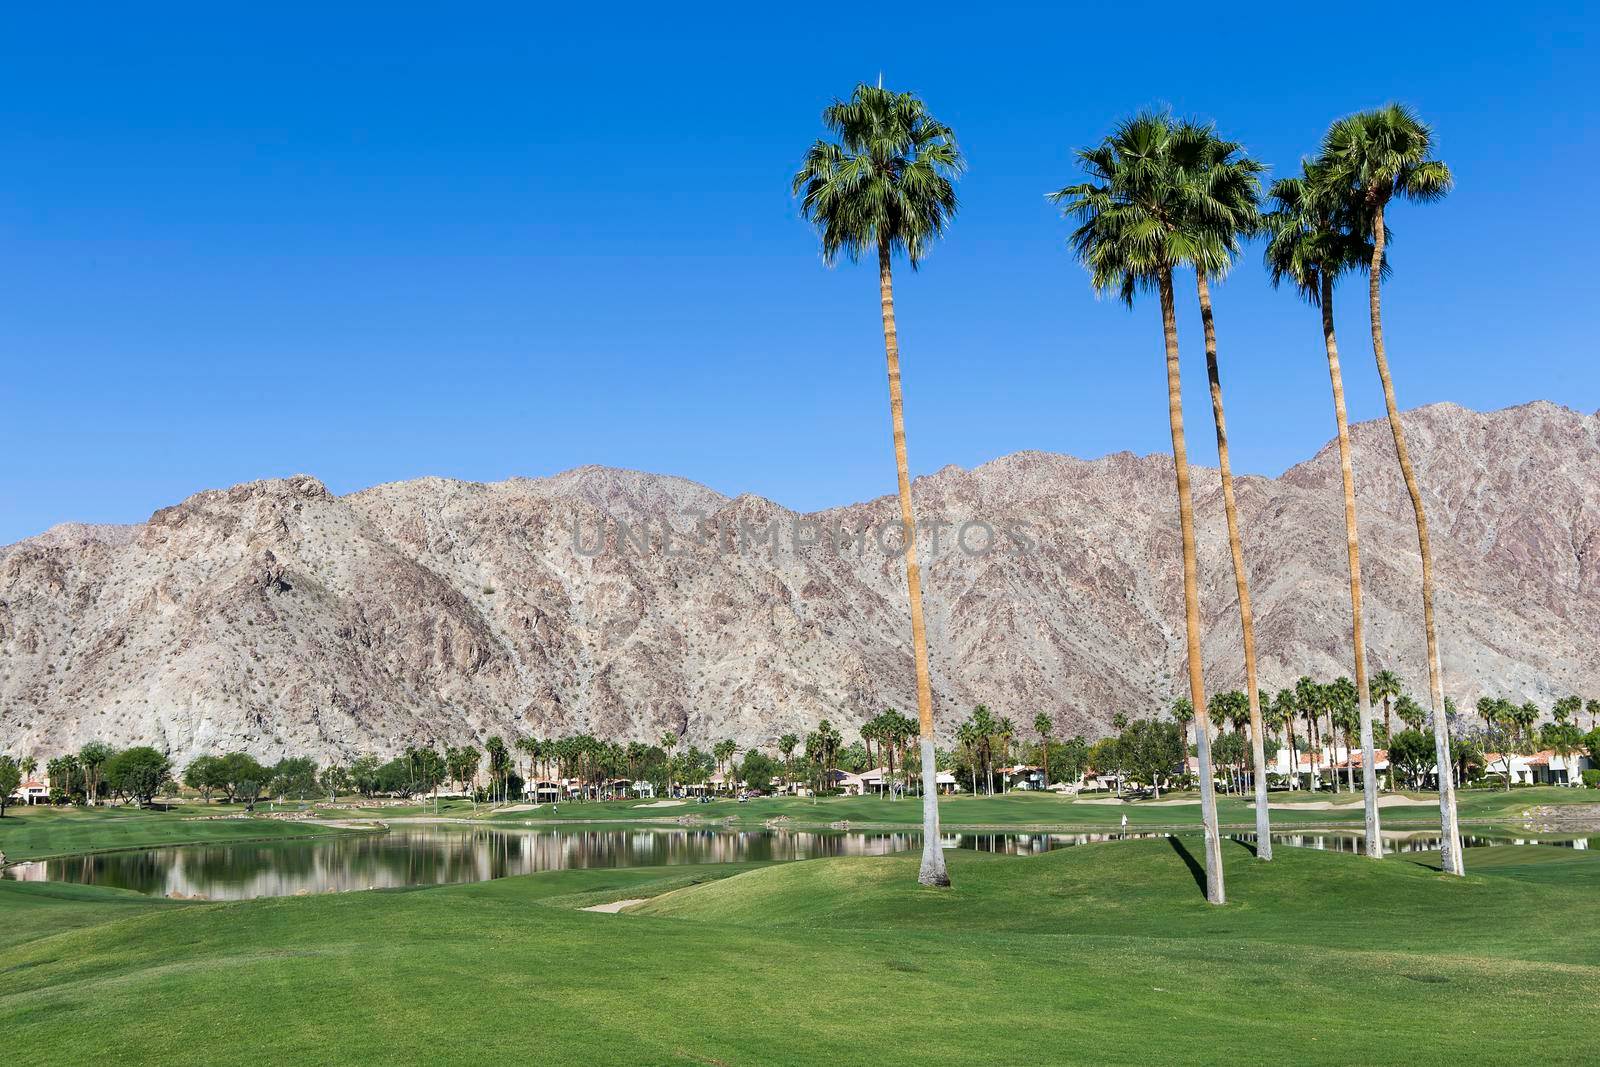 Pga West golf course in La Quinta, Palm Springs, California, usa